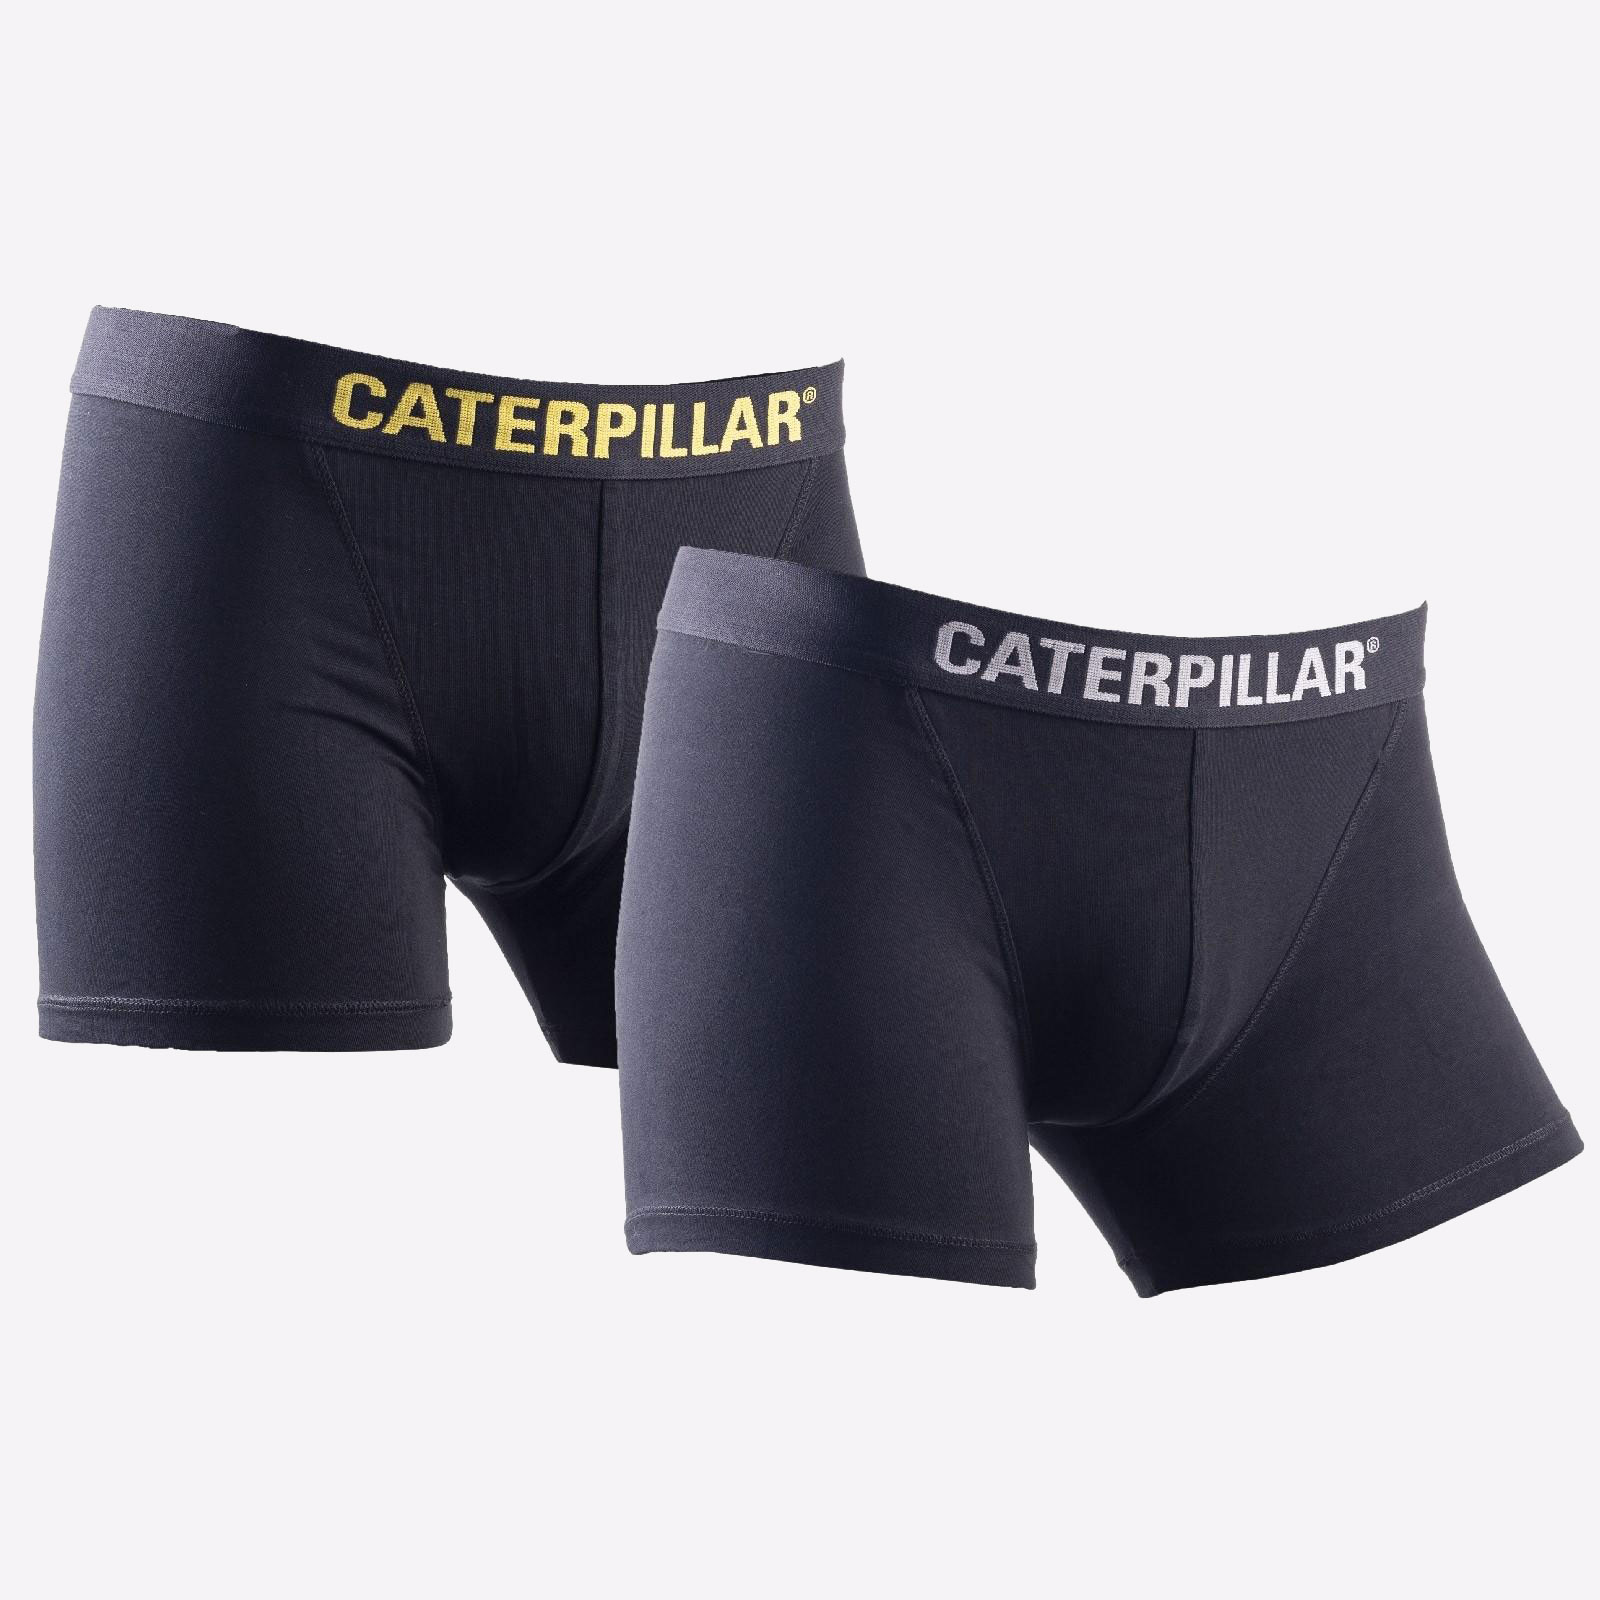 Caterpillar Boxer Shorts 2-Pack Mens - GRD-26019-52537-06